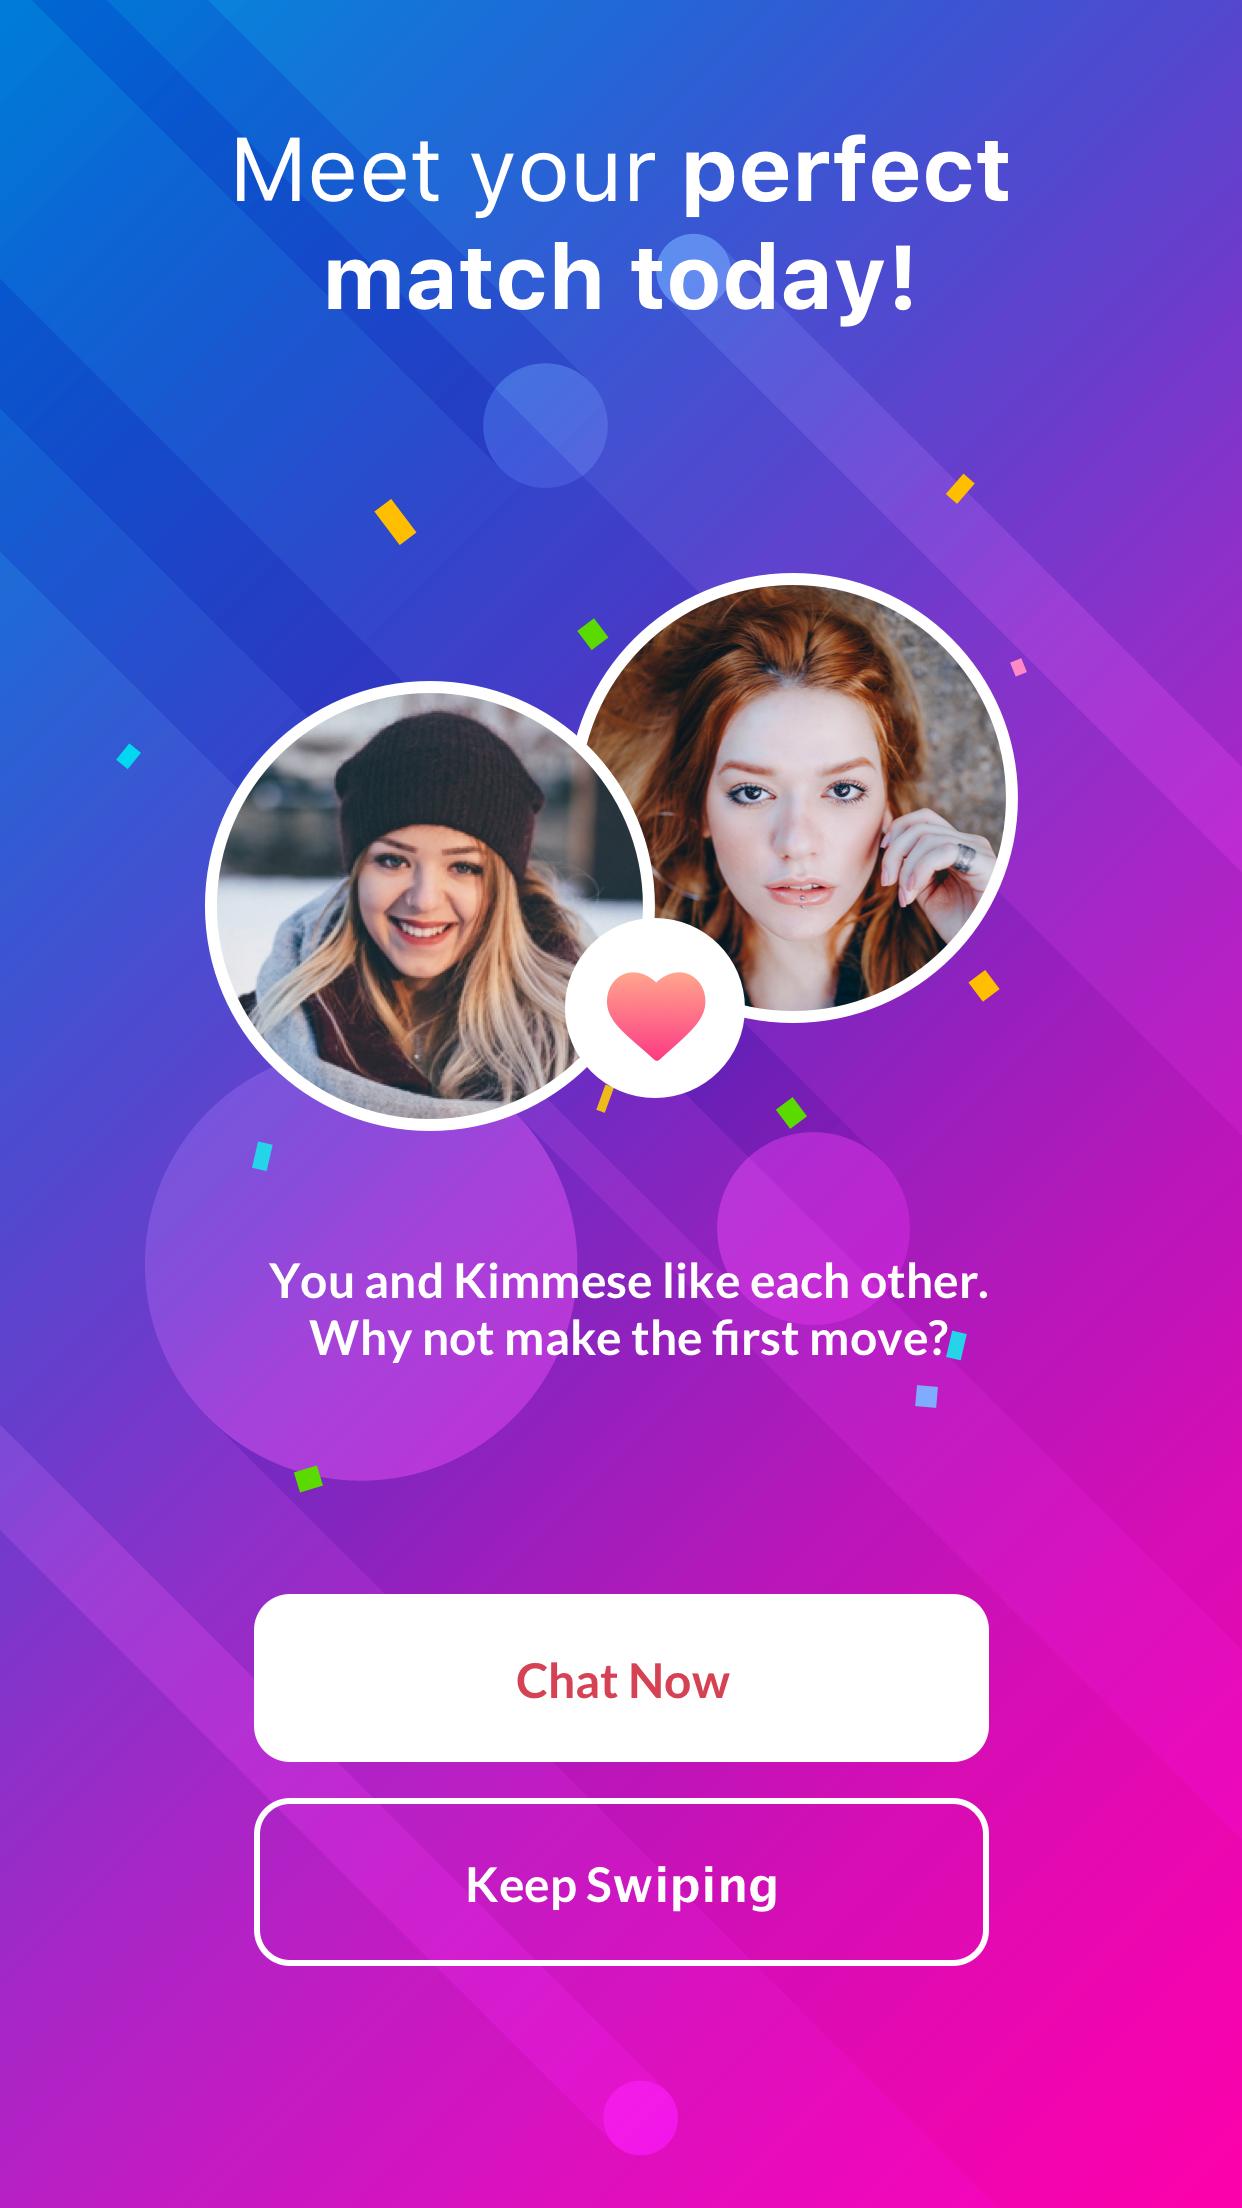 Lesbian dating app